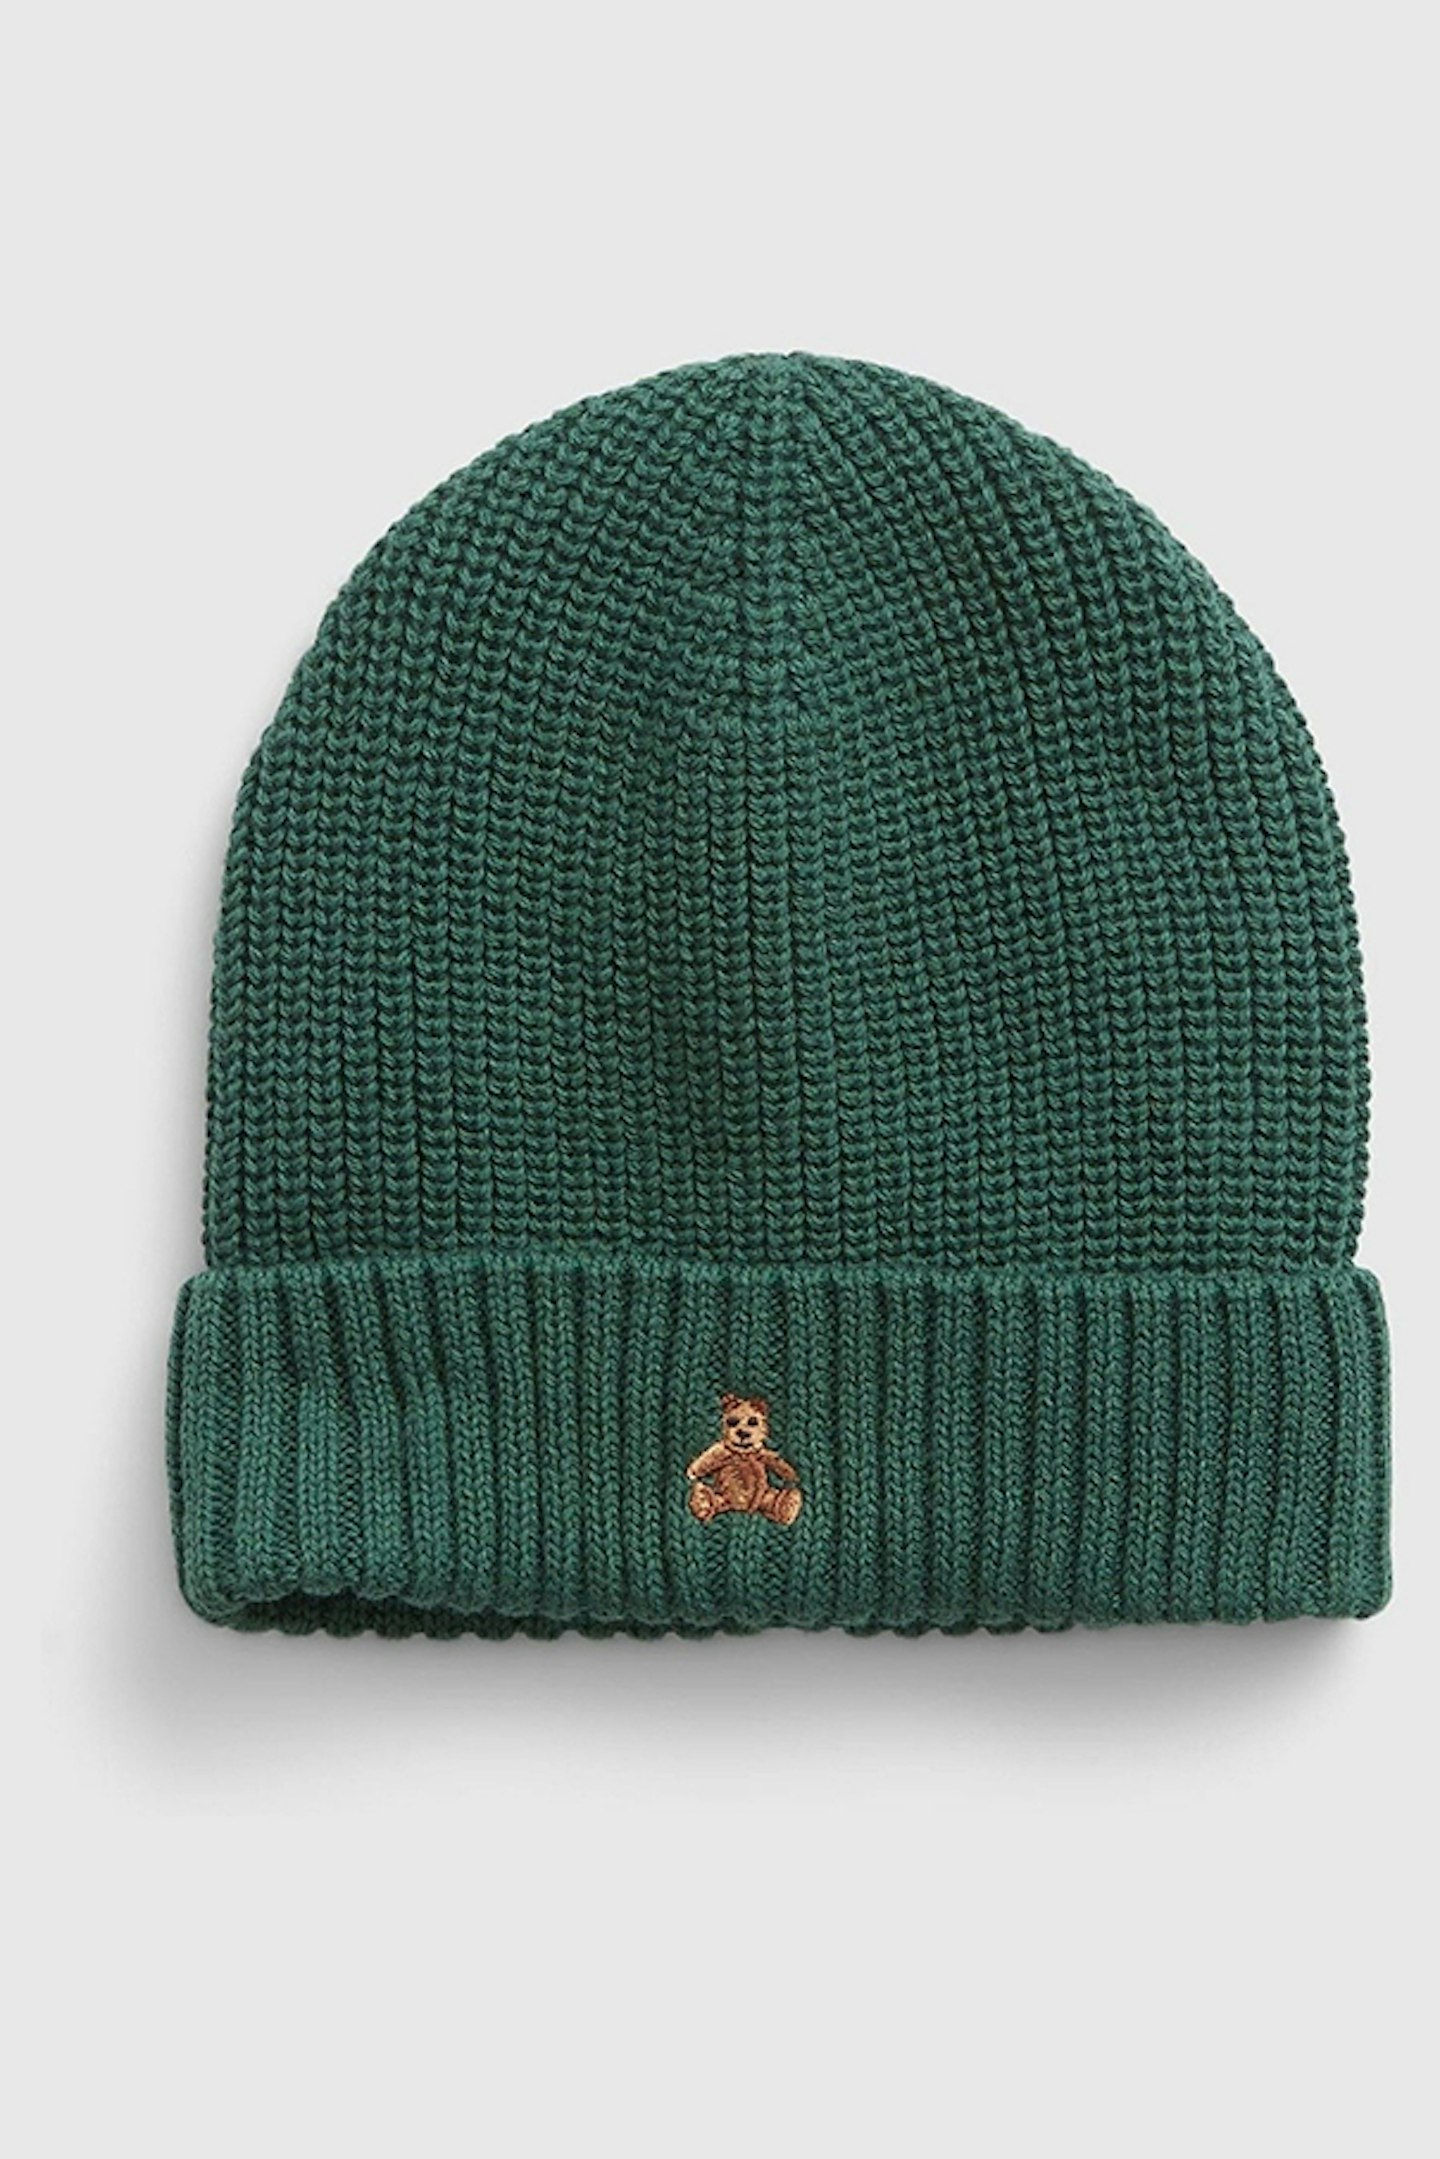 Green Beanie Hat, Gap